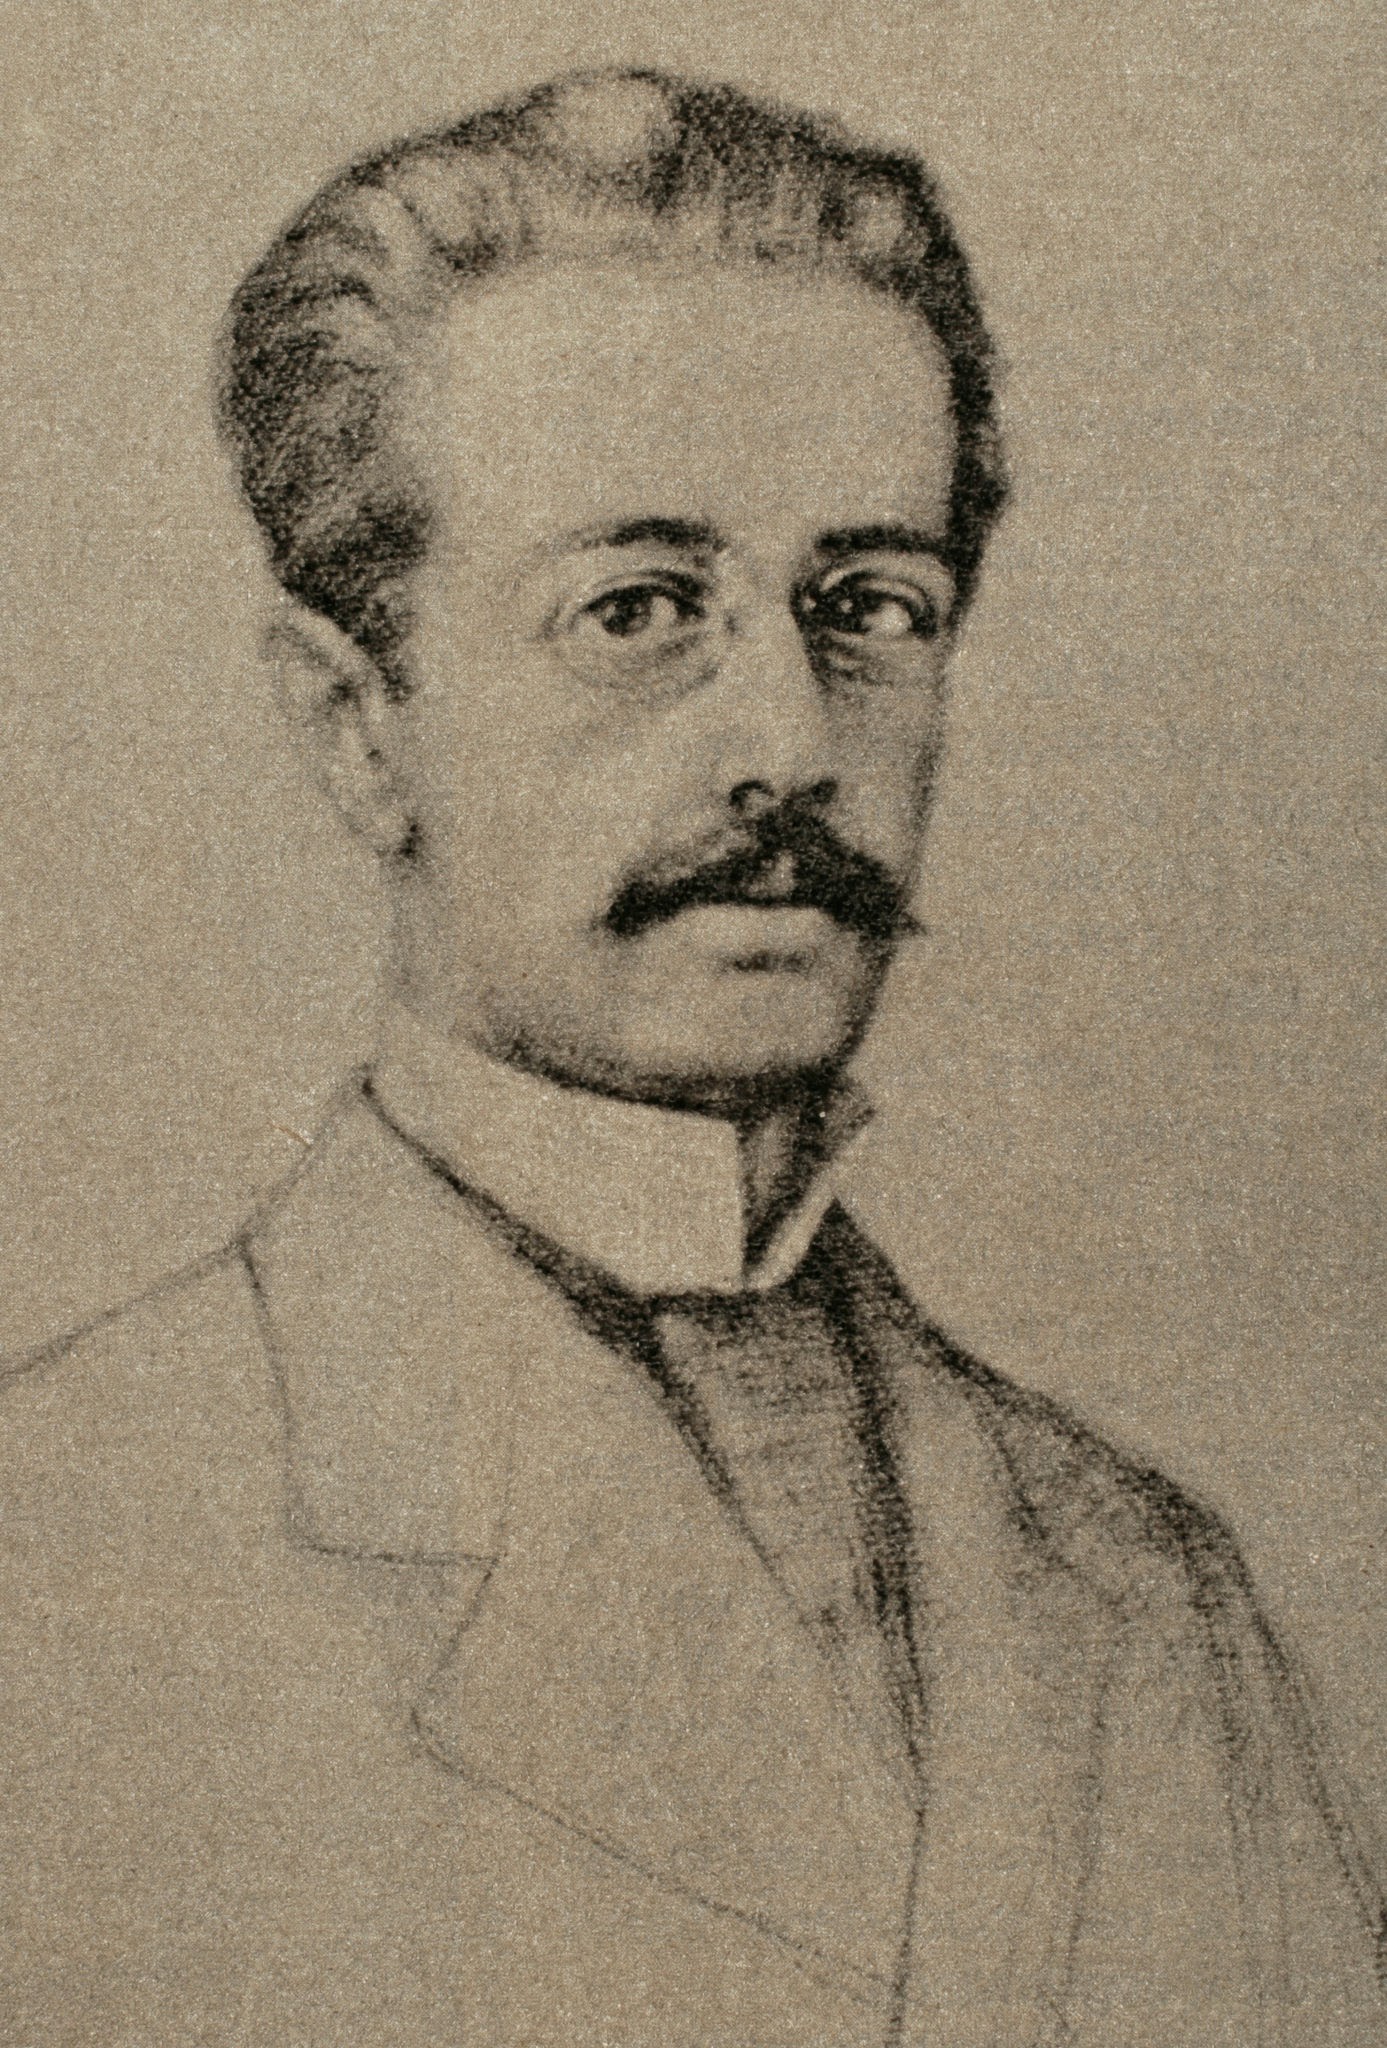 Manuel Girona y Agrafel (1817-1905). Banker, financier, businessman and Spanish politician. Portrait. Engraving. (Photo by: PHAS/UIG via Getty Images)